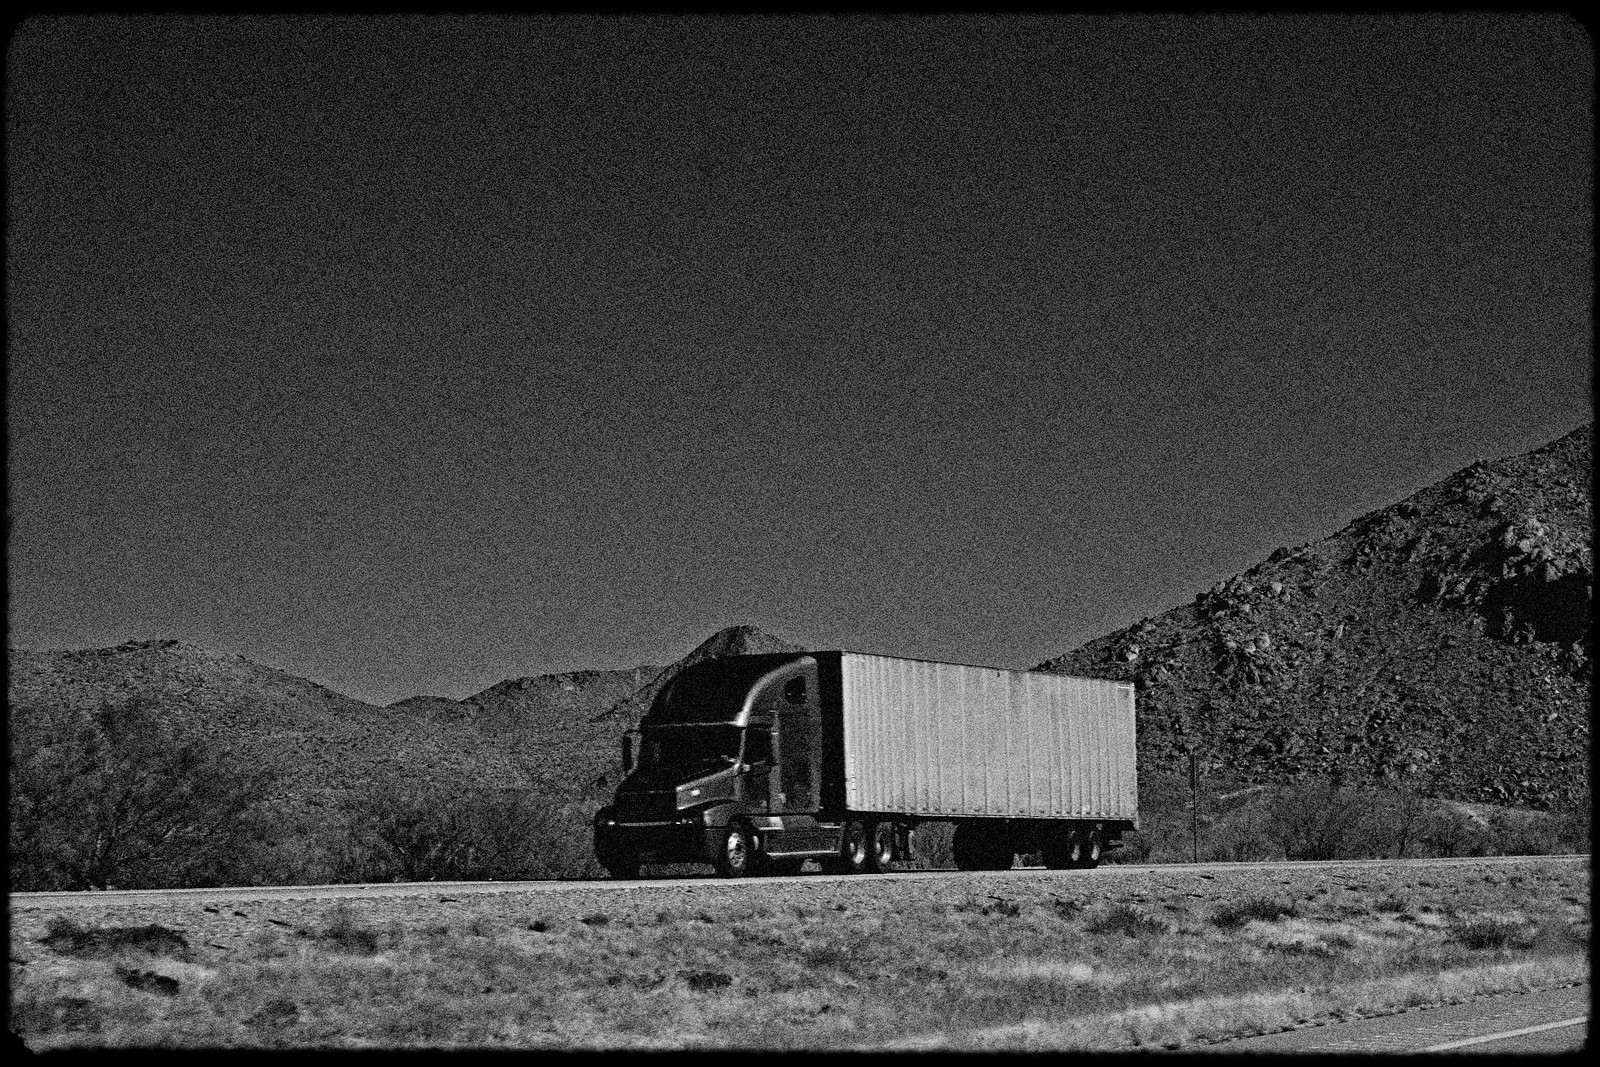 Mack Truck, West Texas, 2006